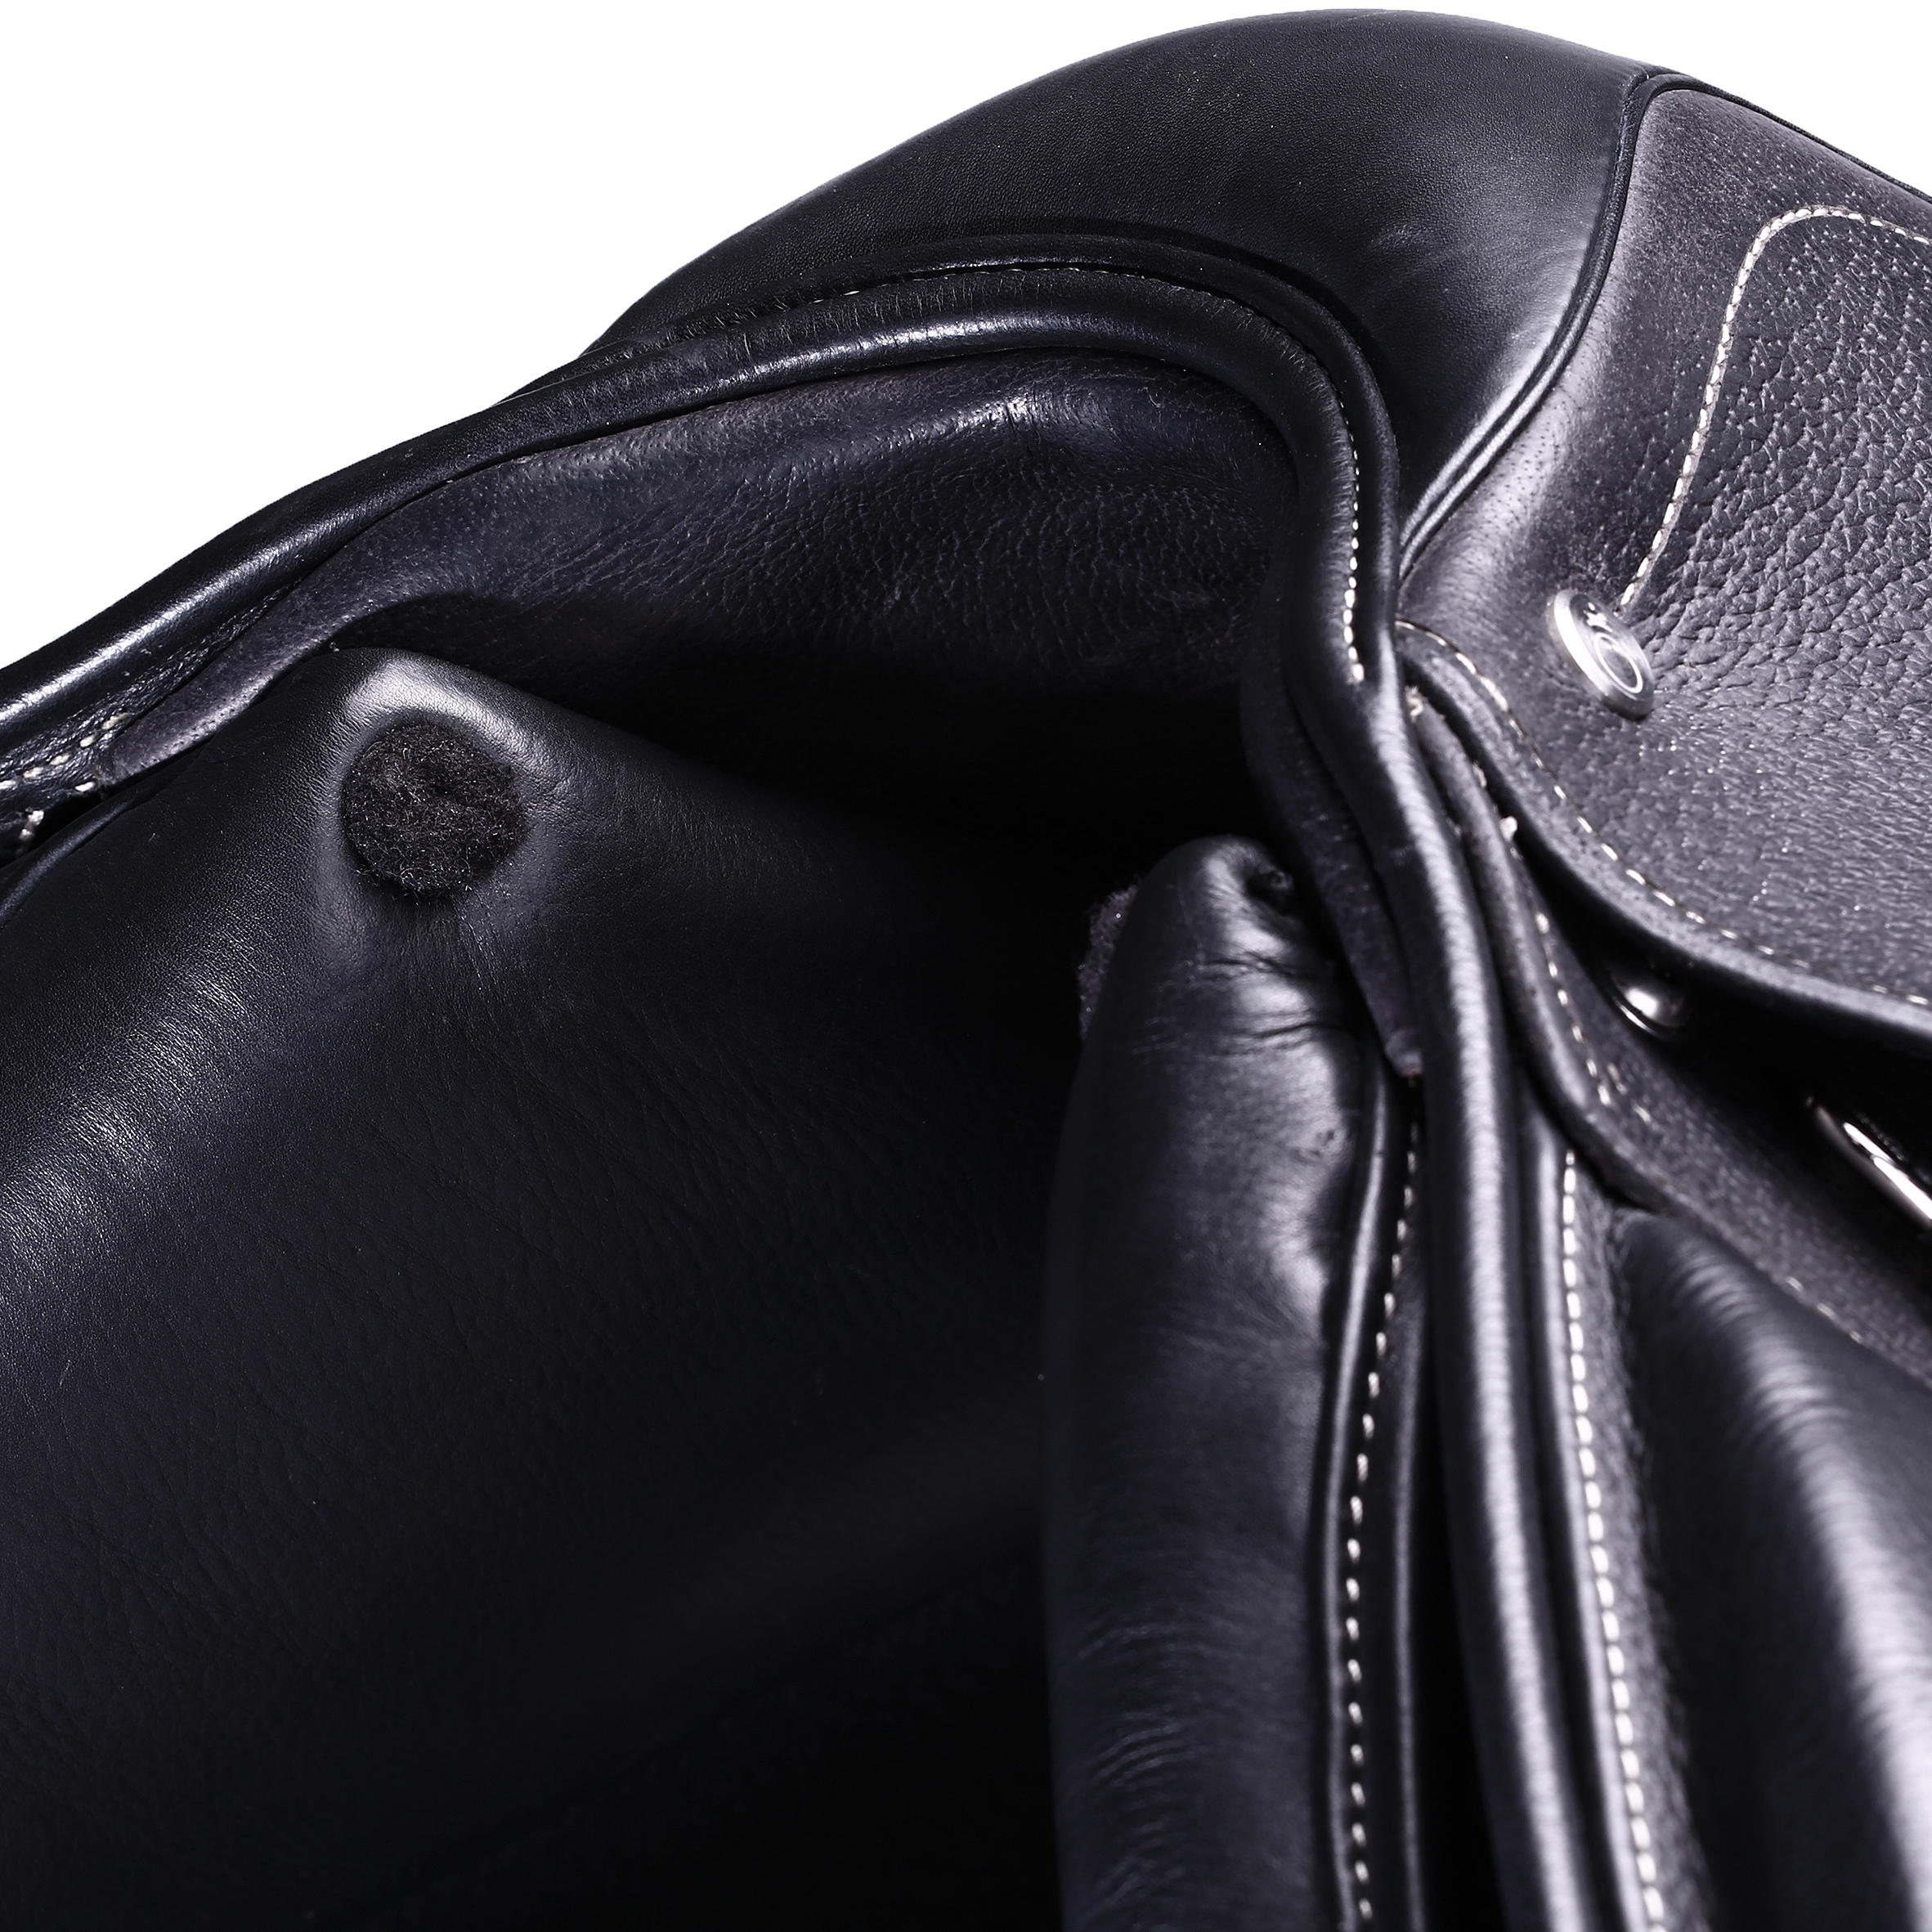 17.5" Versatile Leather Horse Riding Saddle for Horse Paddock - Black 8/15